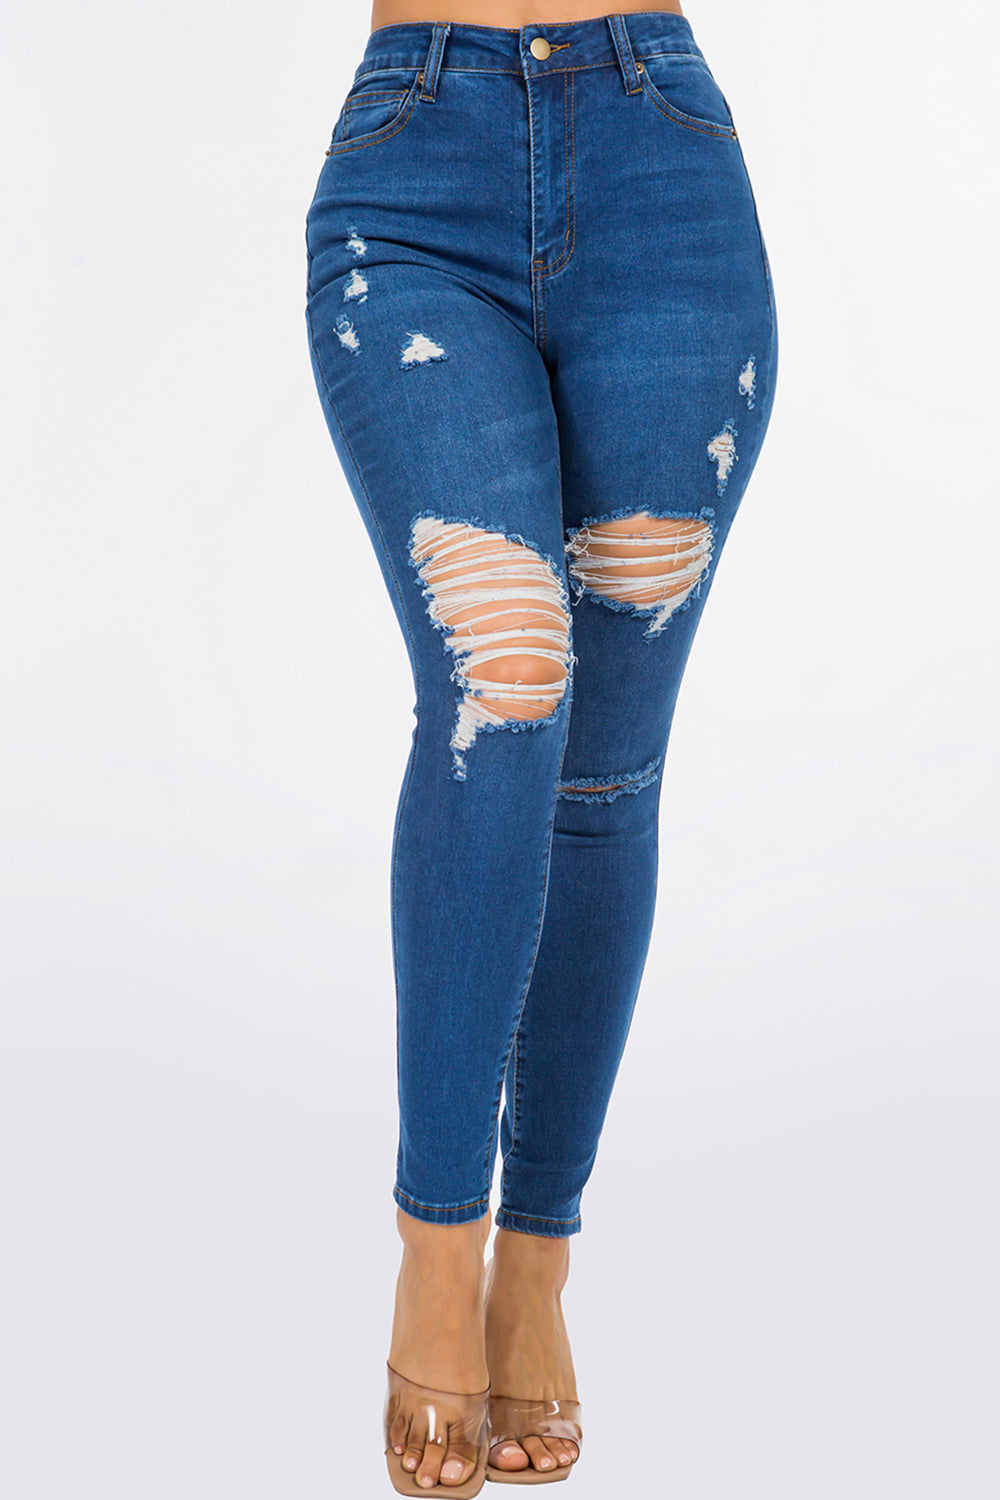 Women's Signature Premium Skinny Jeans, Mid-Rise | Jeans at L.L.Bean